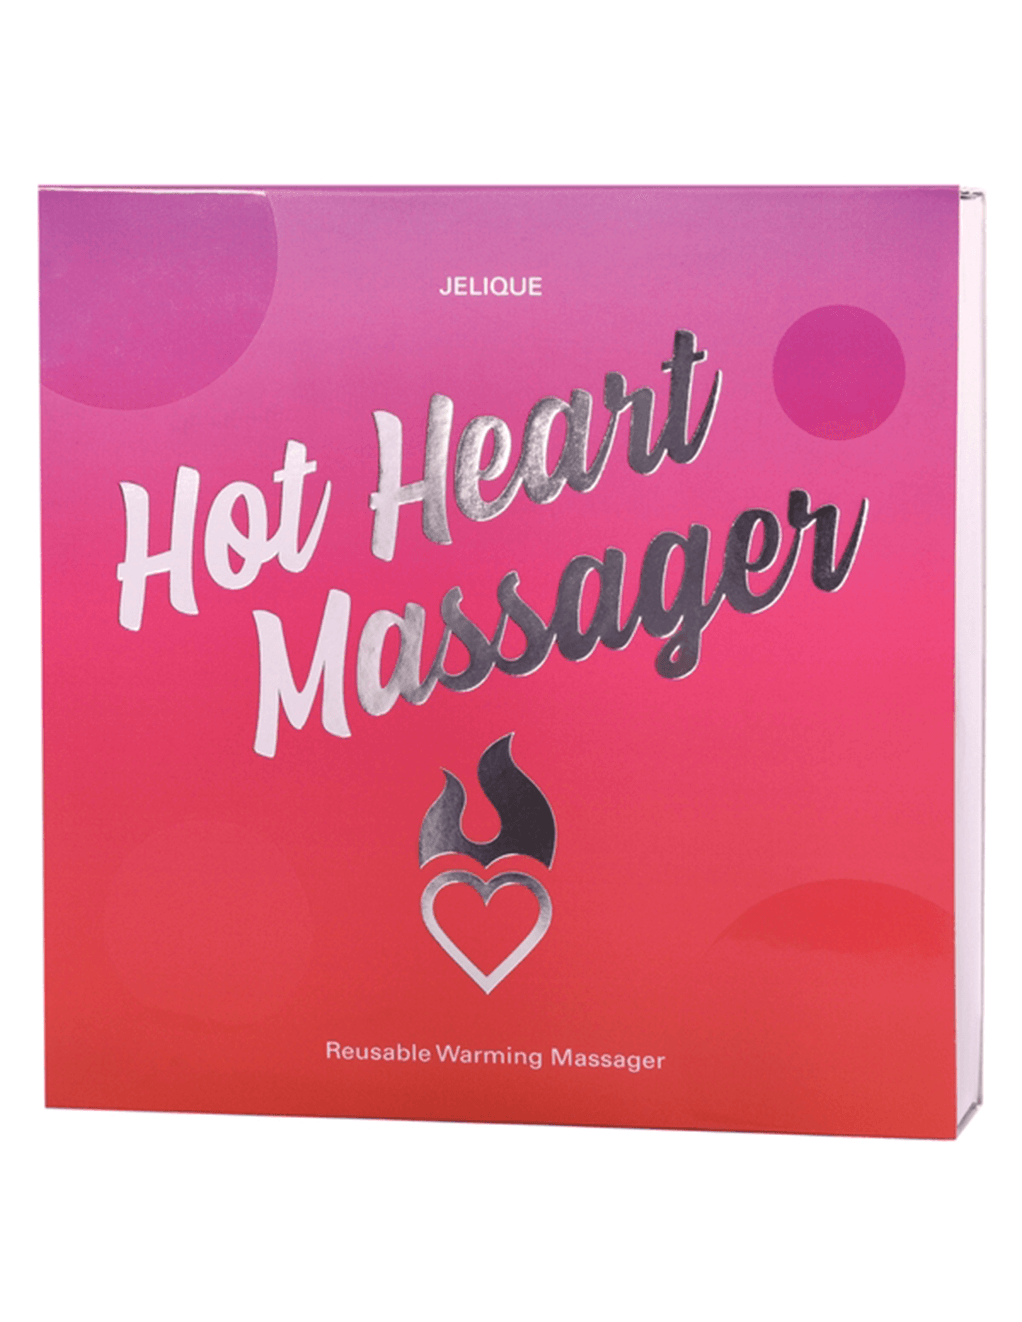 Jelique Hot Heart Massager - Box Front